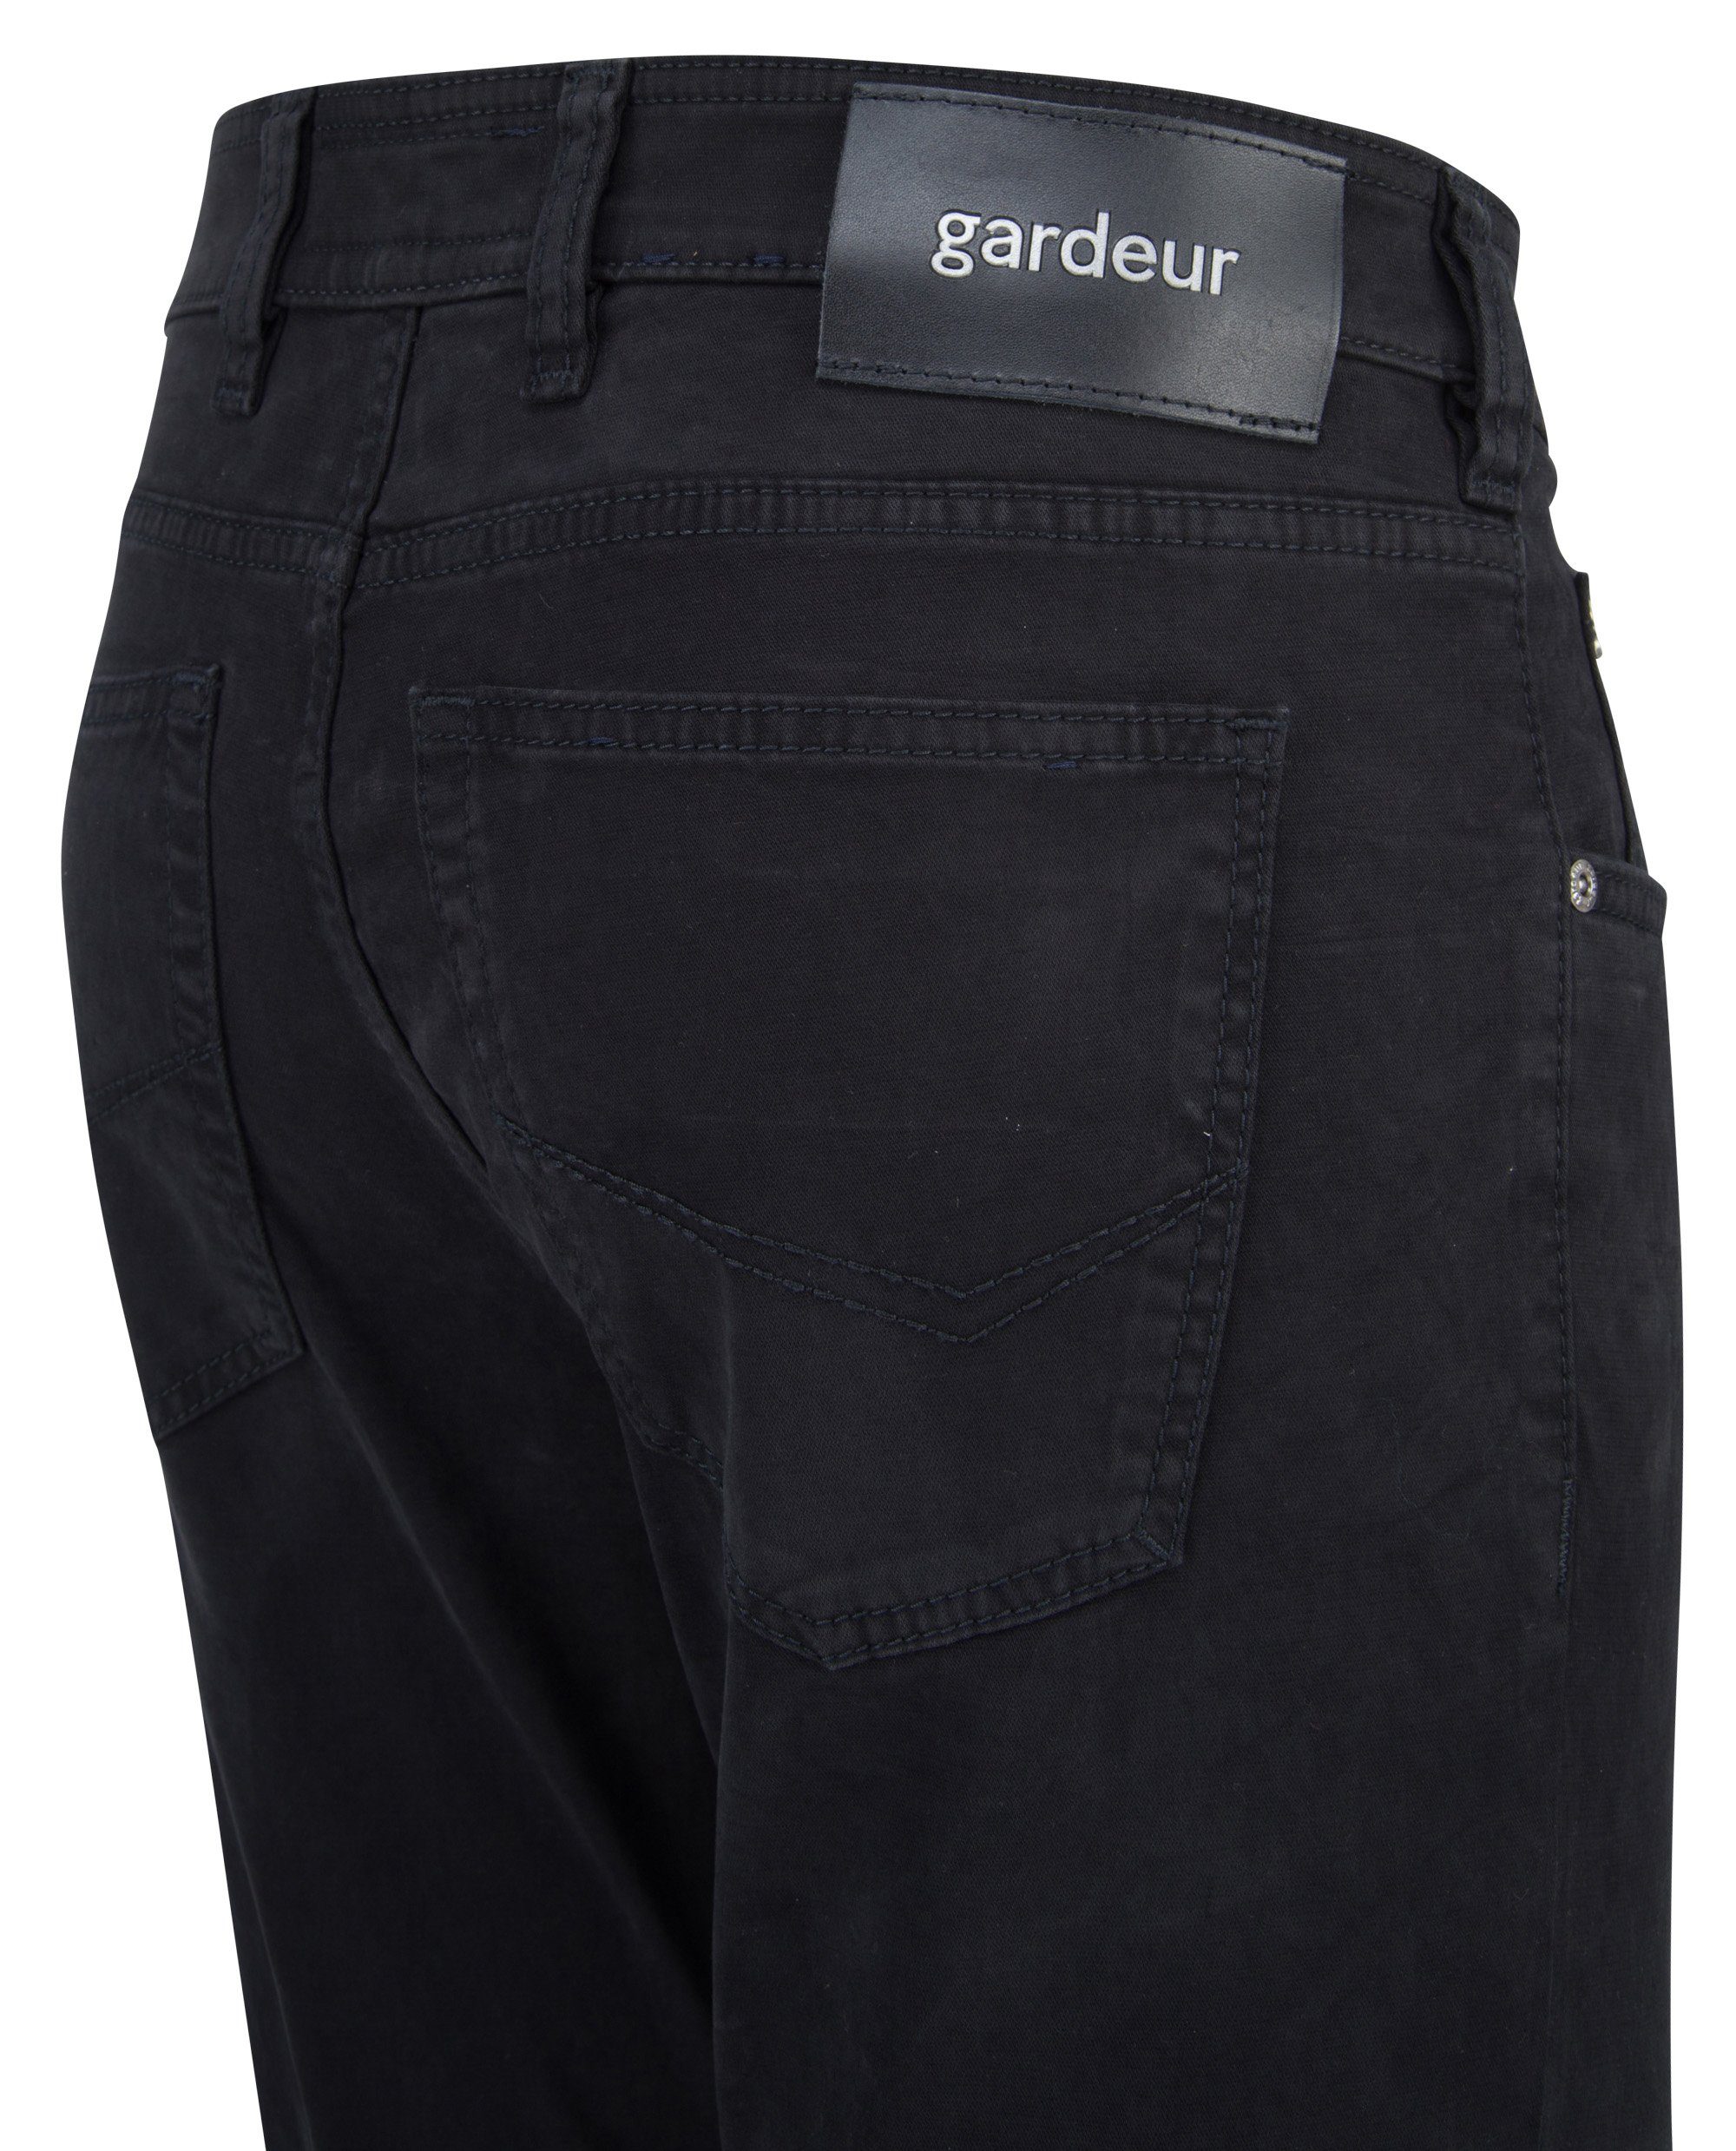 BILL Atelier ATELIER GARDEUR GARDEUR black 3-0-413861-99 5-Pocket-Jeans